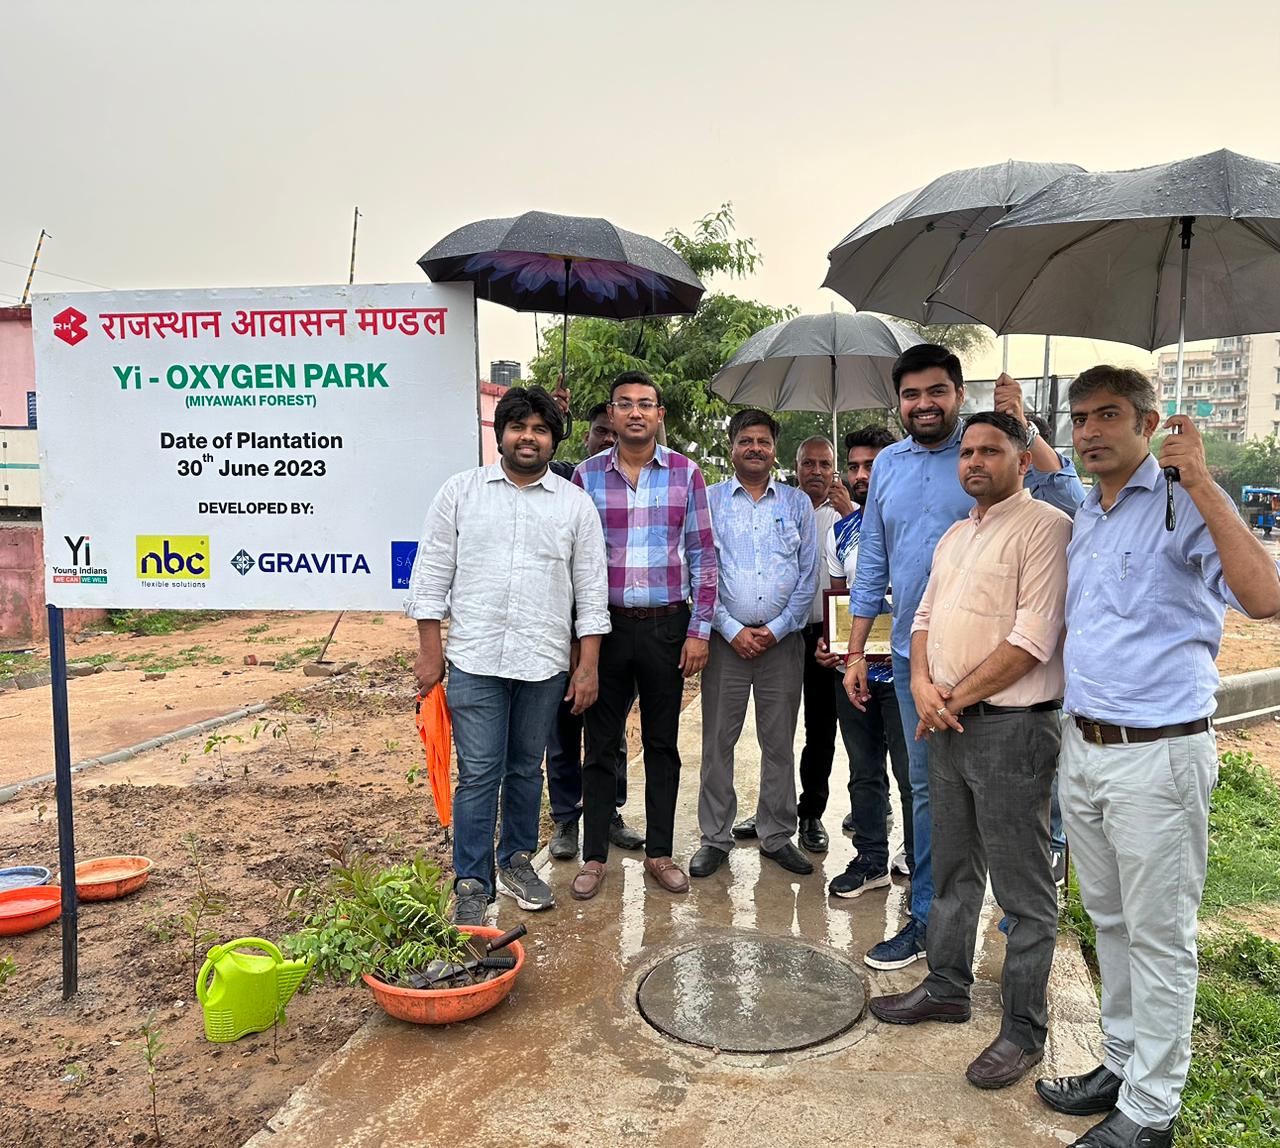 CII’s Young Indians Jaipur & Rajasthan Housing Board Establish Oxygen Park